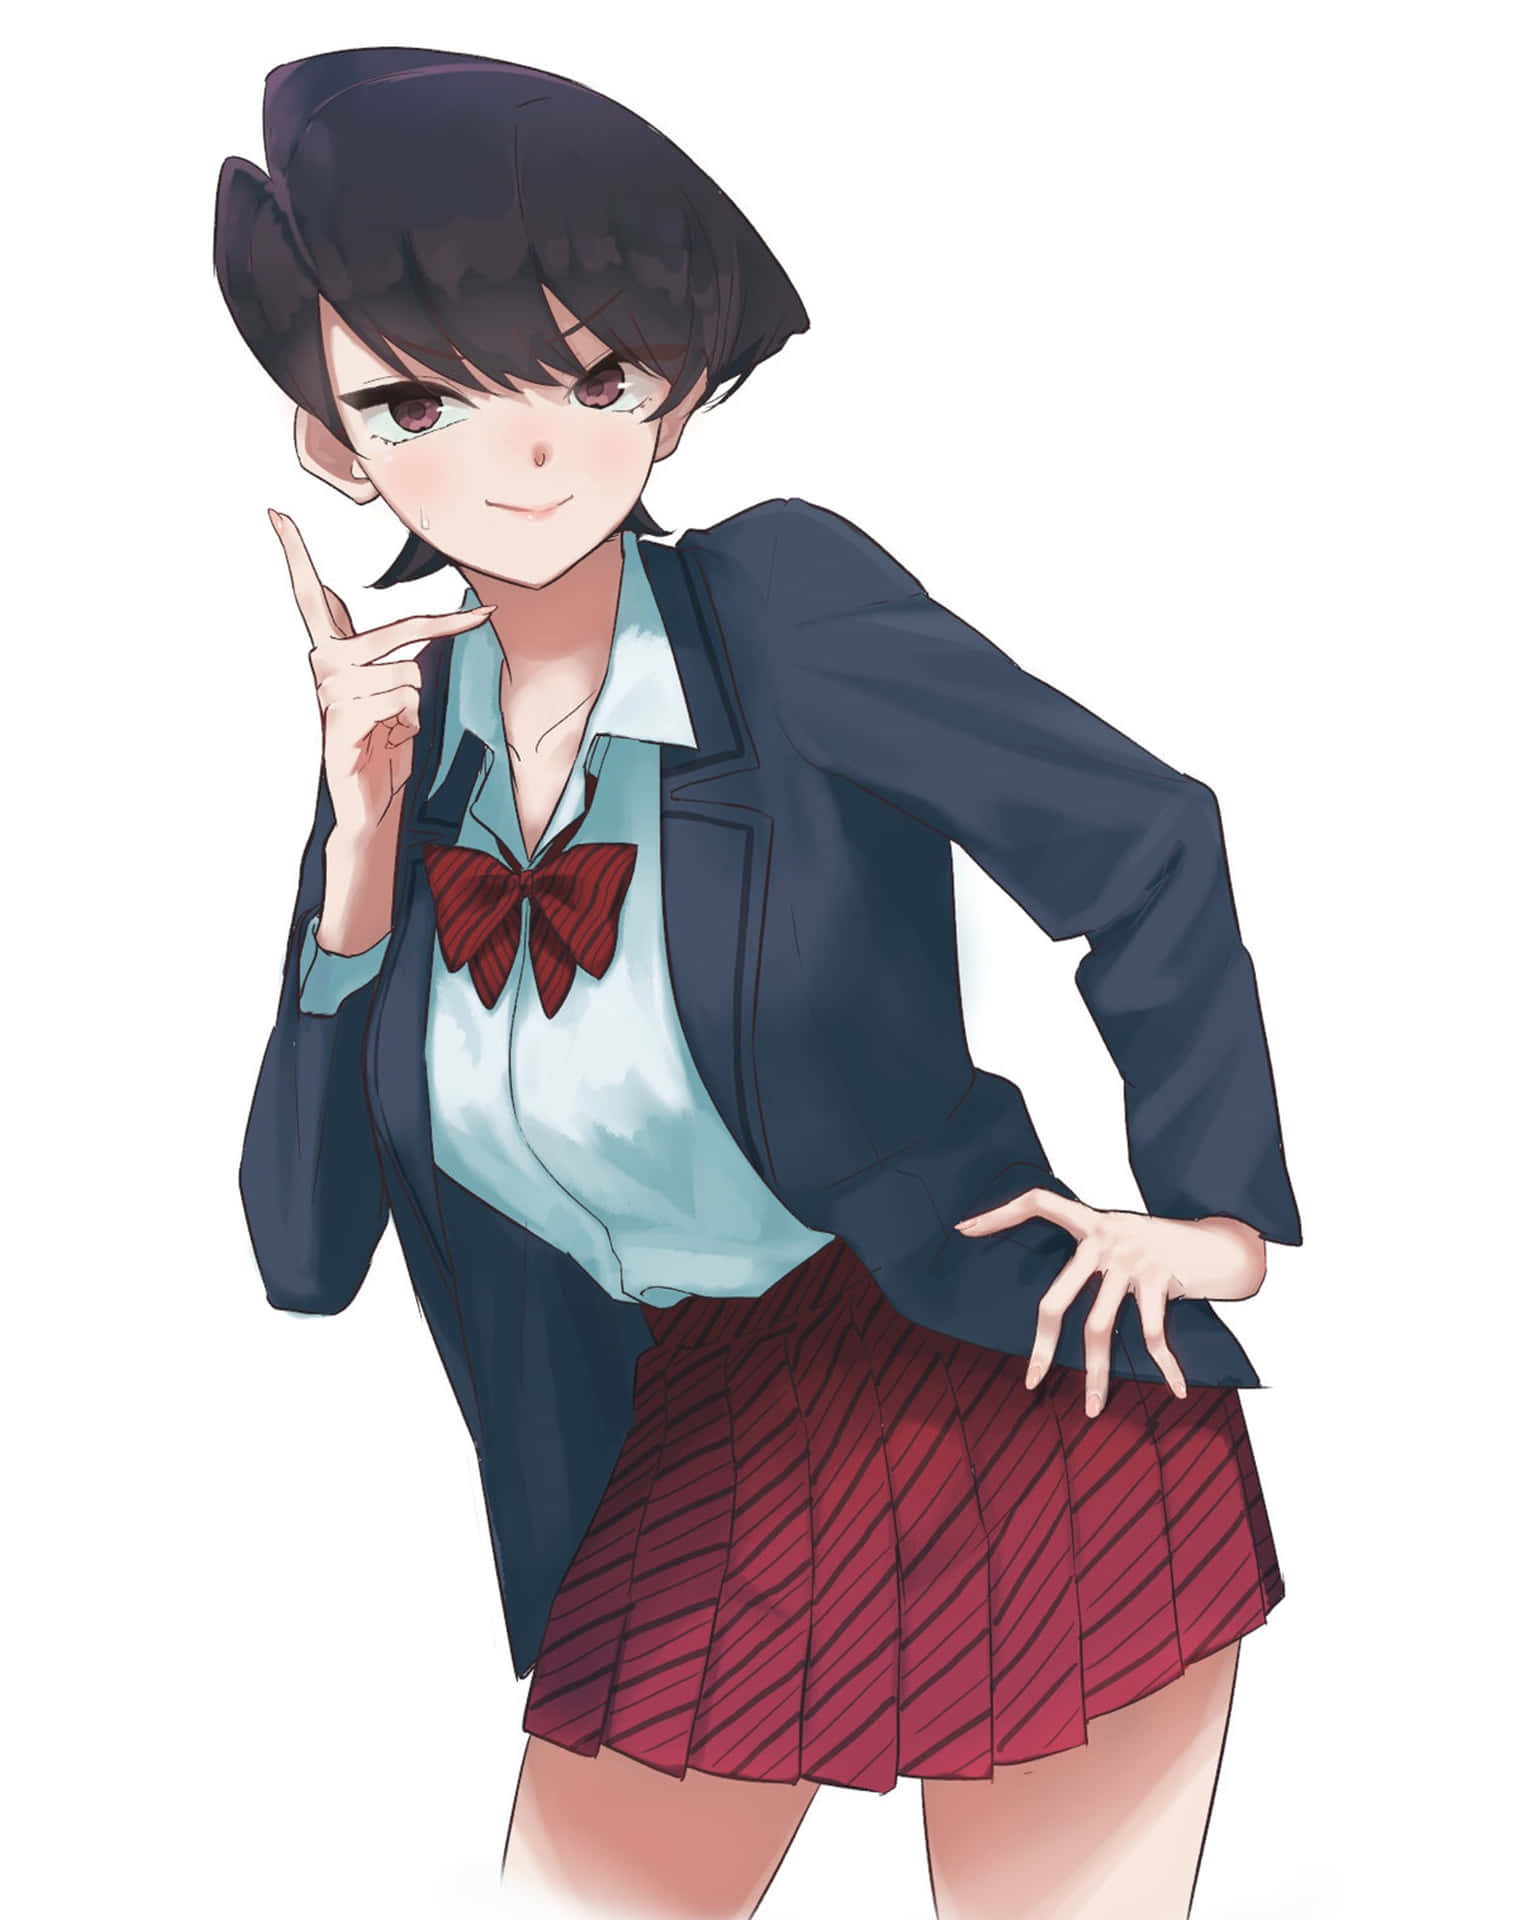 Blushing Komi Shouko Background